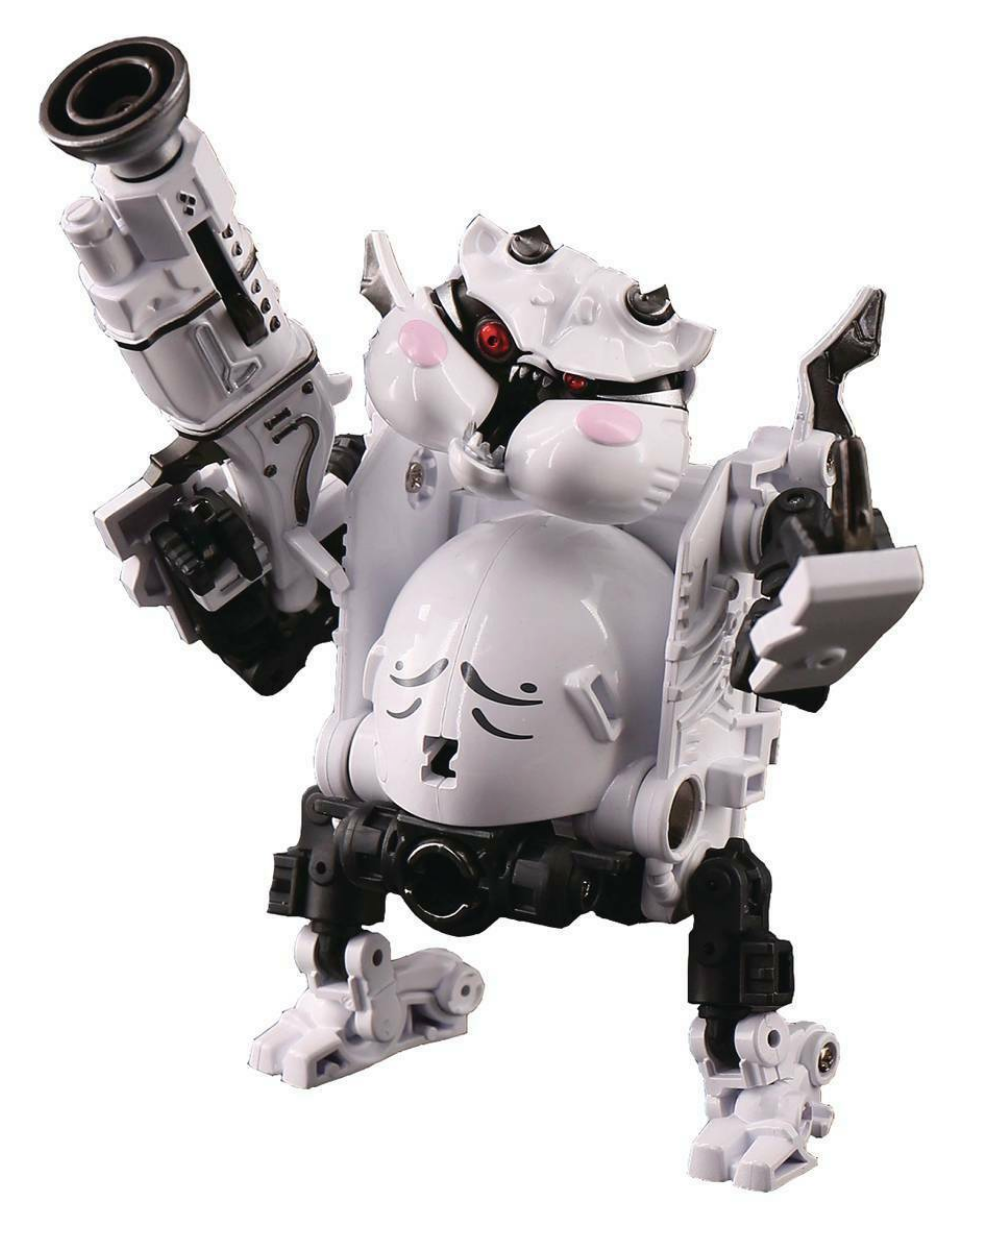 Toywolf W-02 Water Man Transformer Urinal Robot Samurai